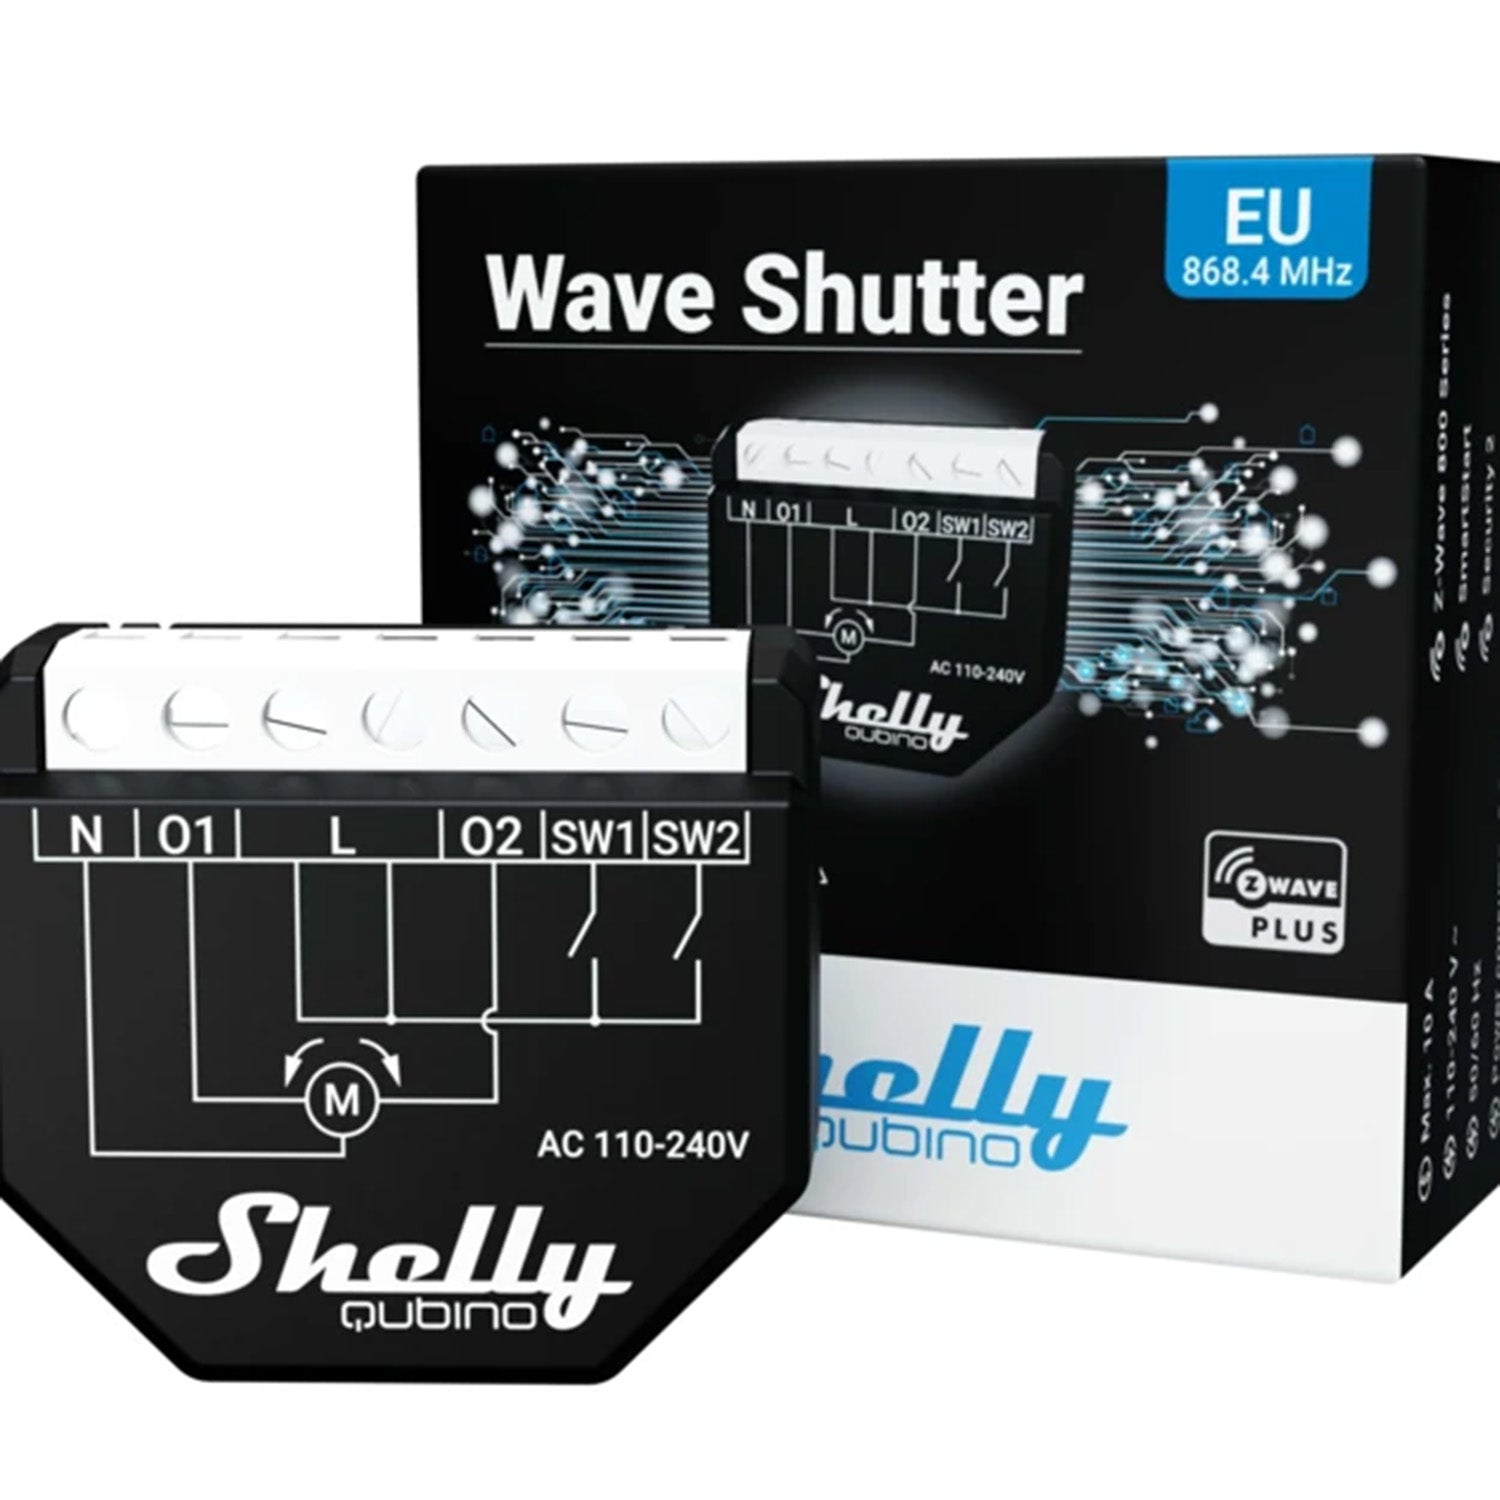 Shelly Qubino Wave Shutter Rollladenschalter